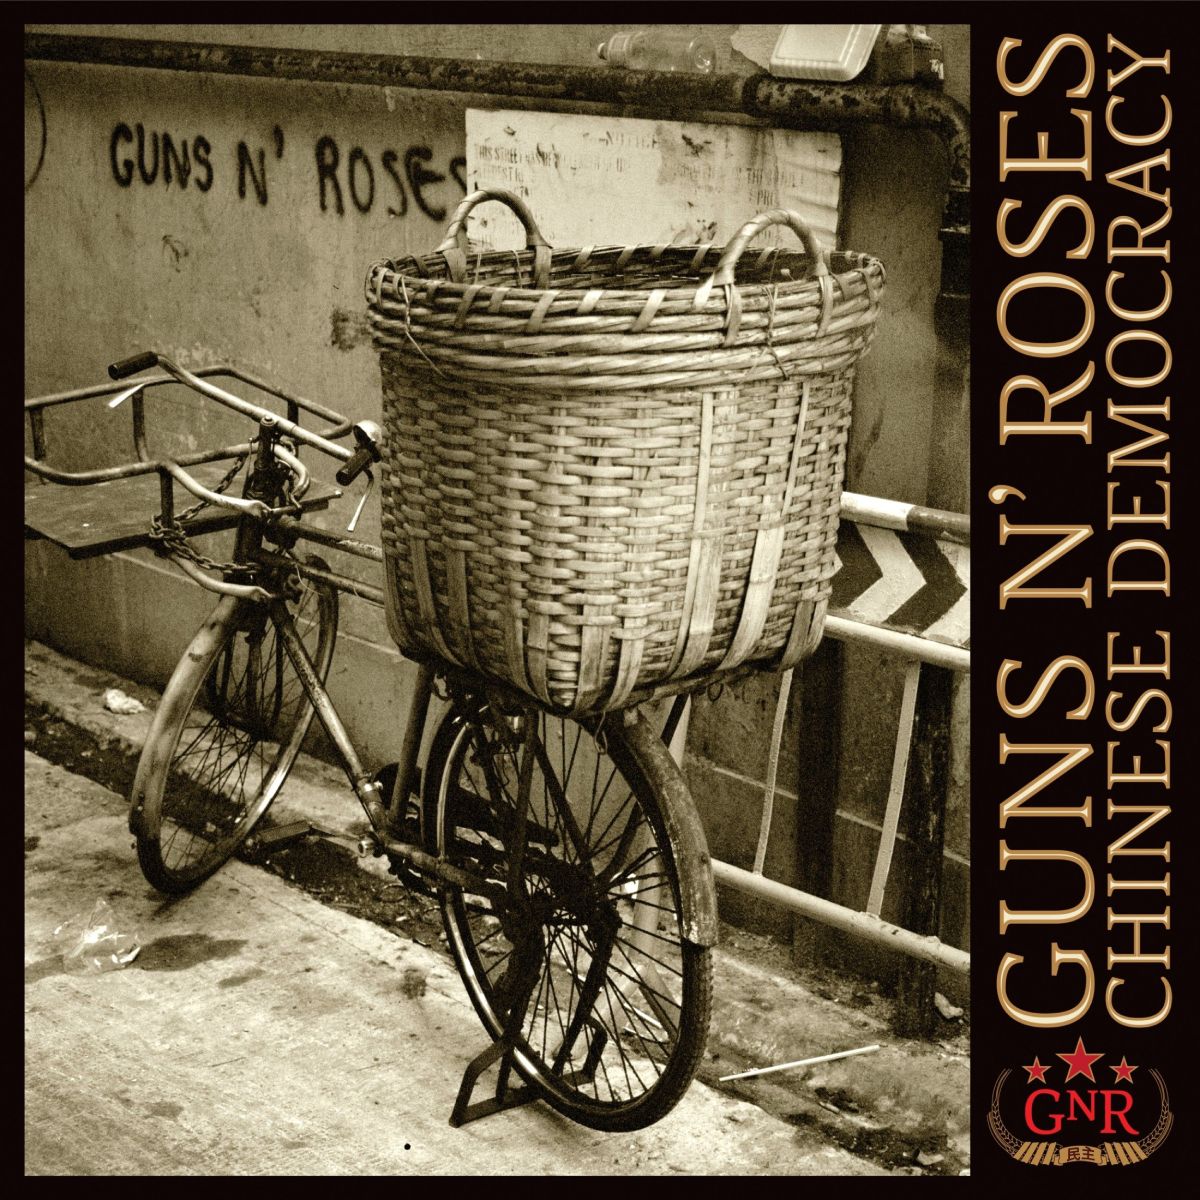 Guns N' Roses, album "Chinese Democracy"